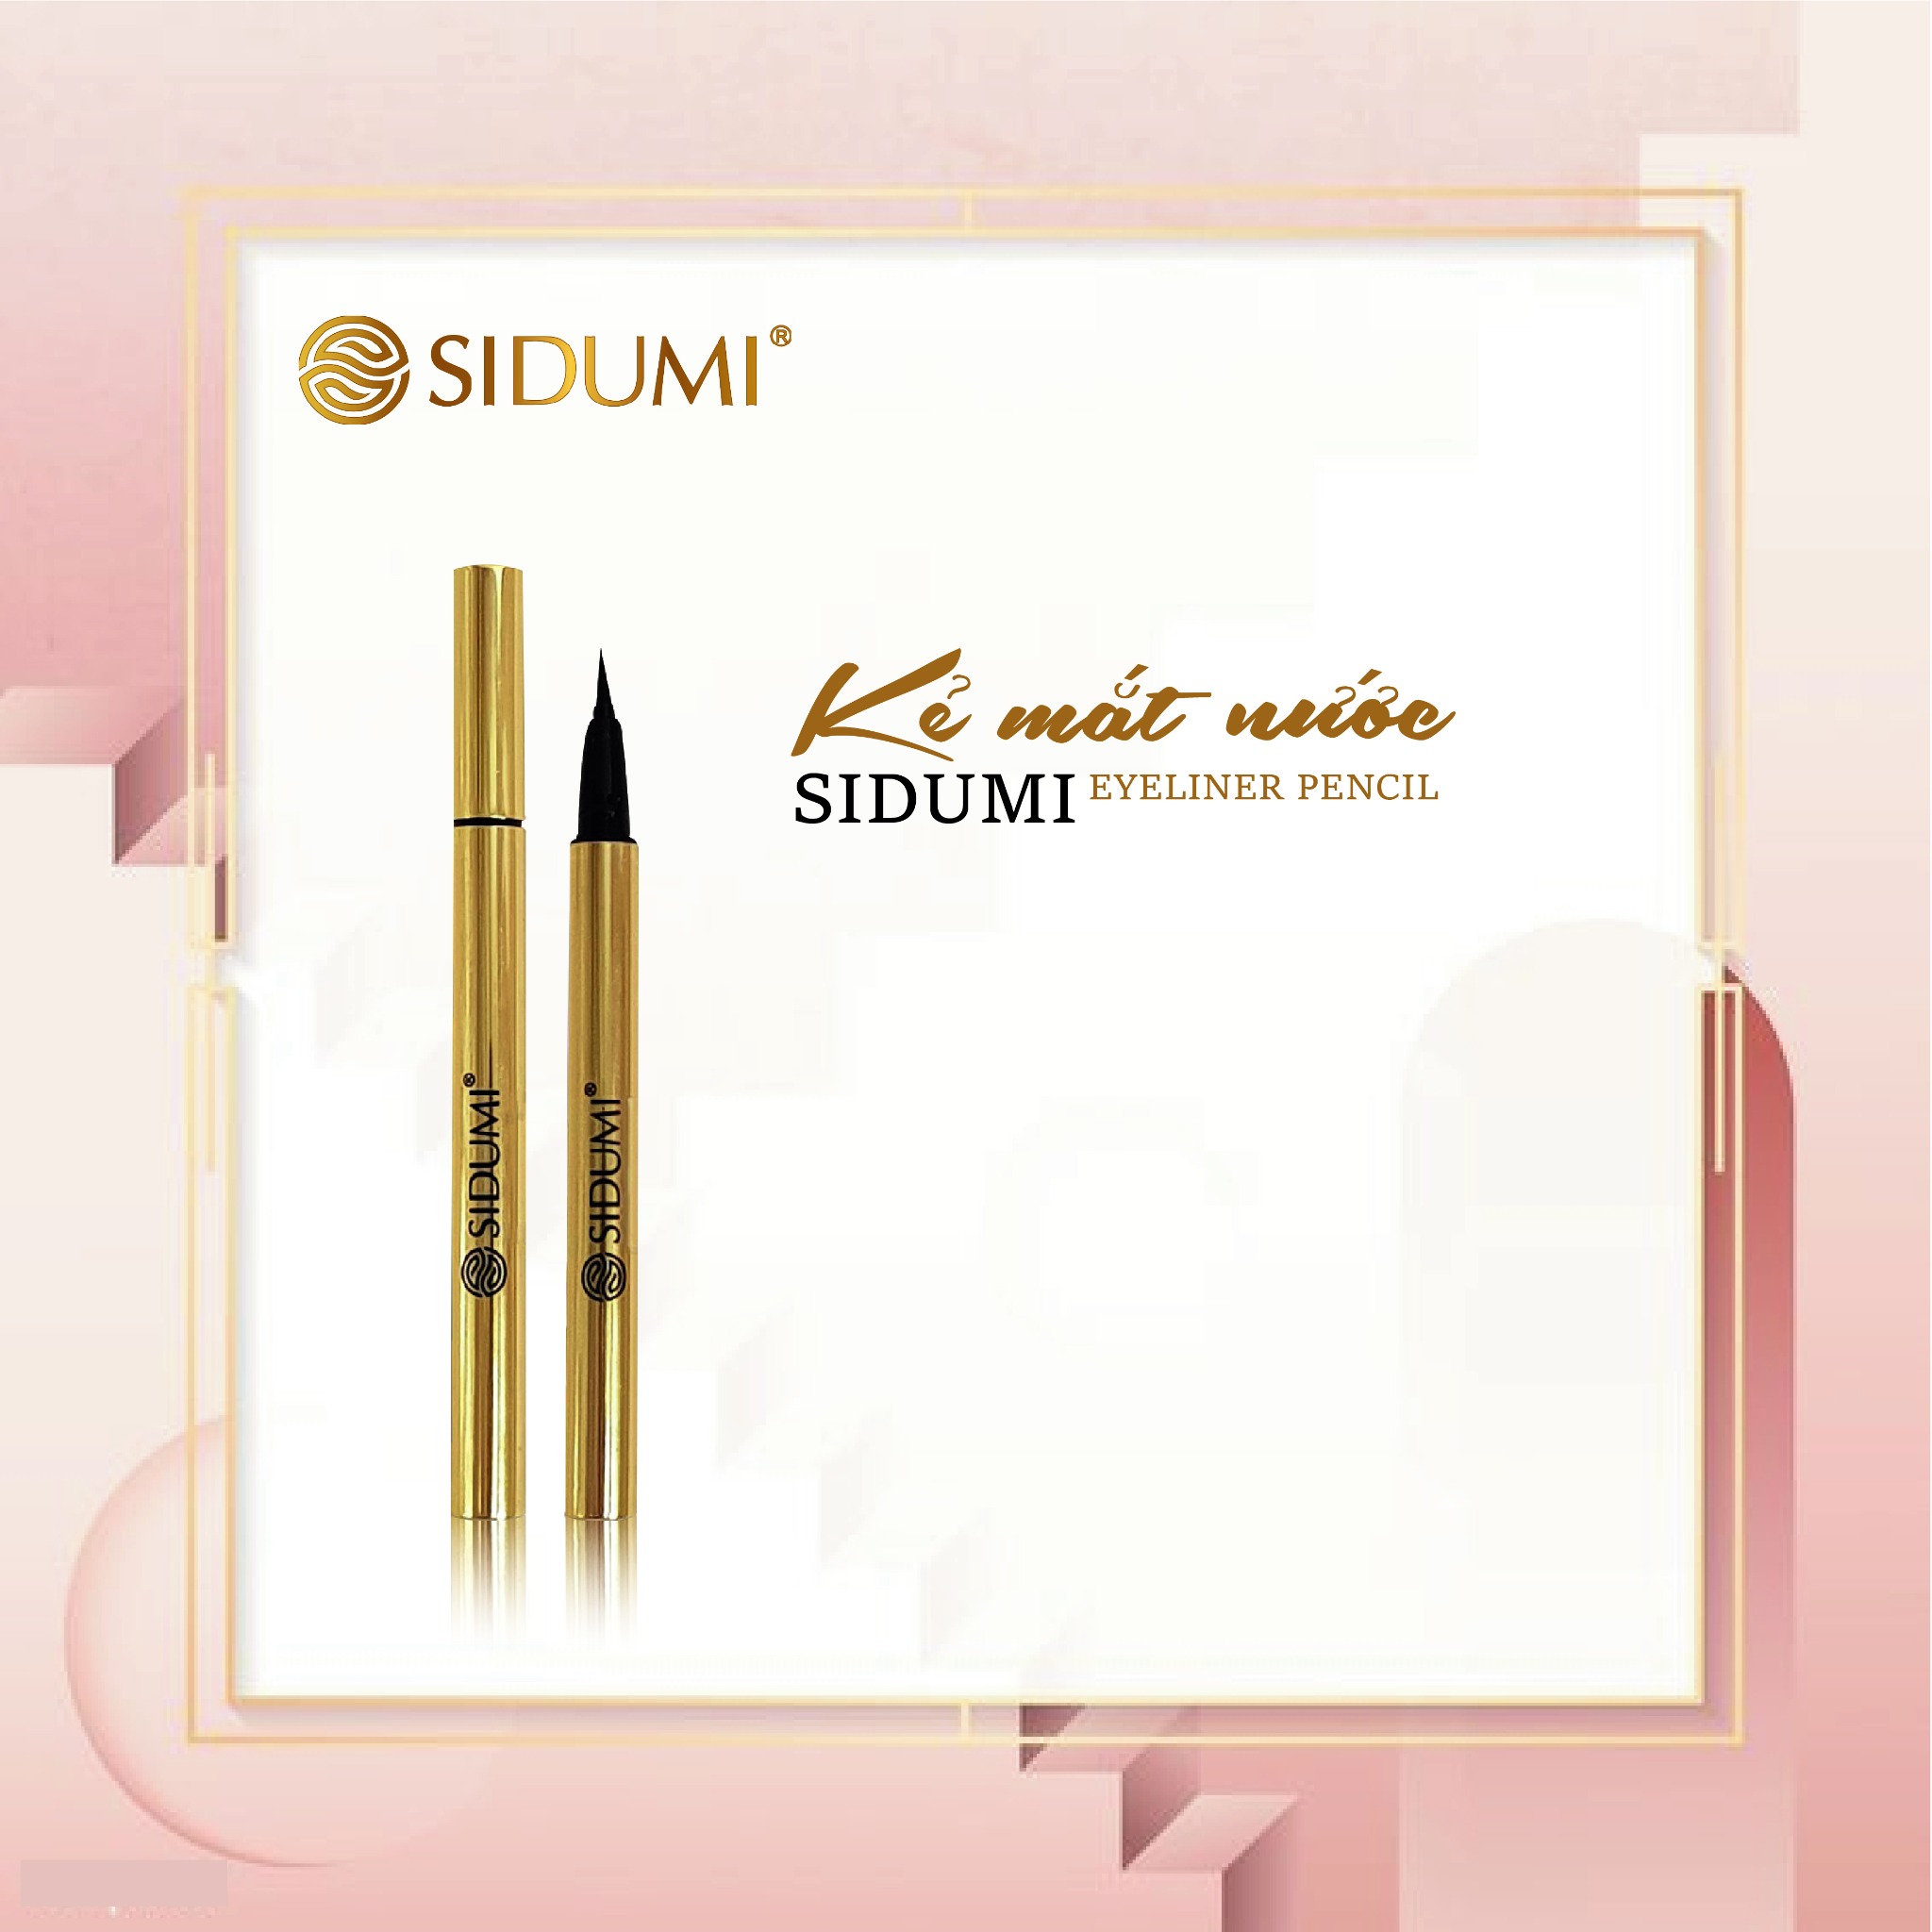 KẺ MẮT NƯỚC SIDUMI  Sidumi eyeliner pencil  SDM KM313